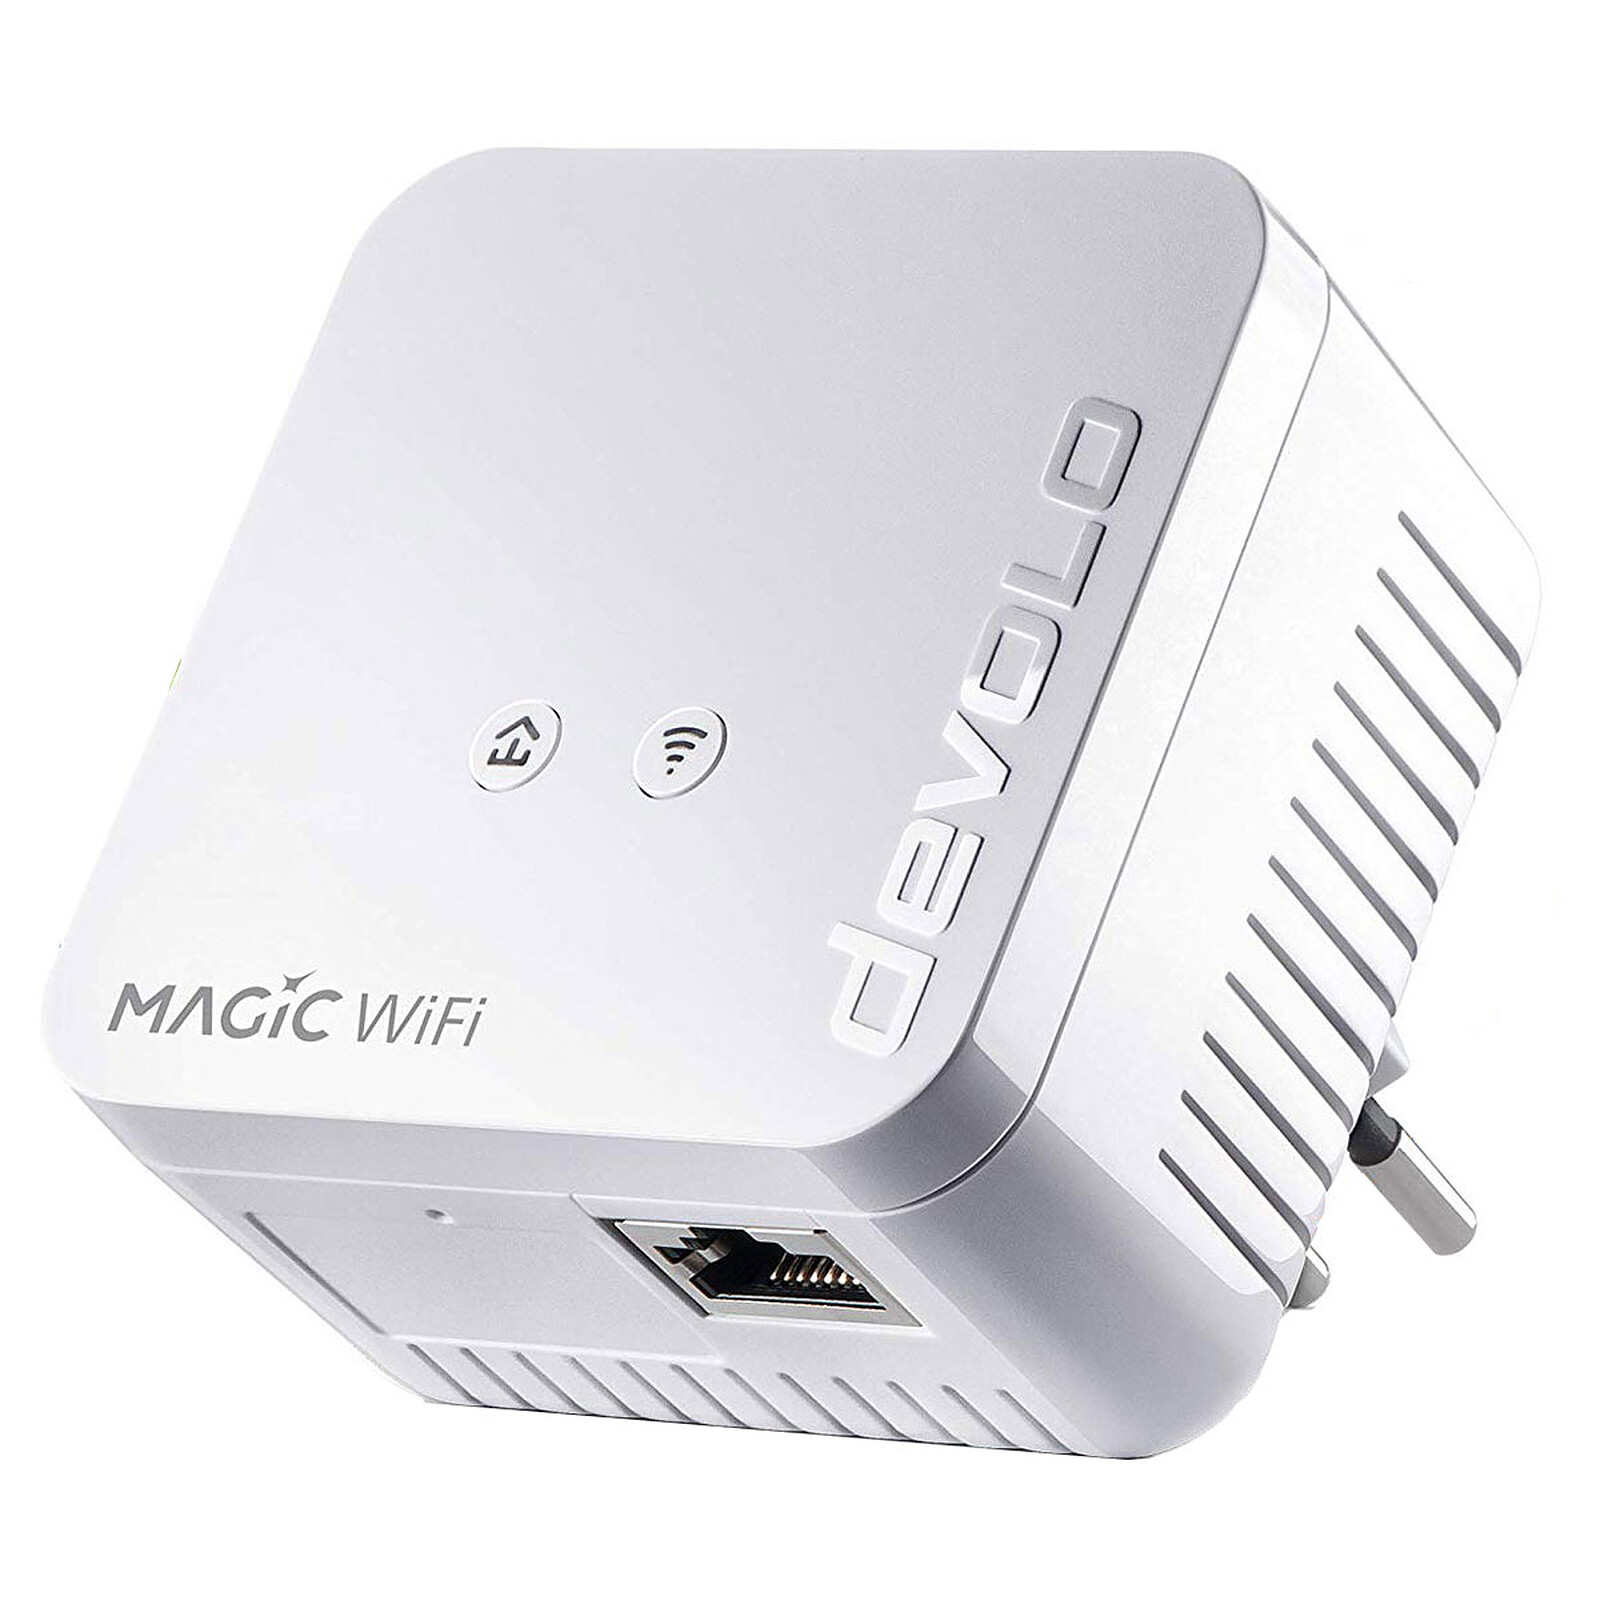 Buy devolo Magic 1-1200 Wi-Fi 5 Add-On Powerline Adapter, Mesh Wi